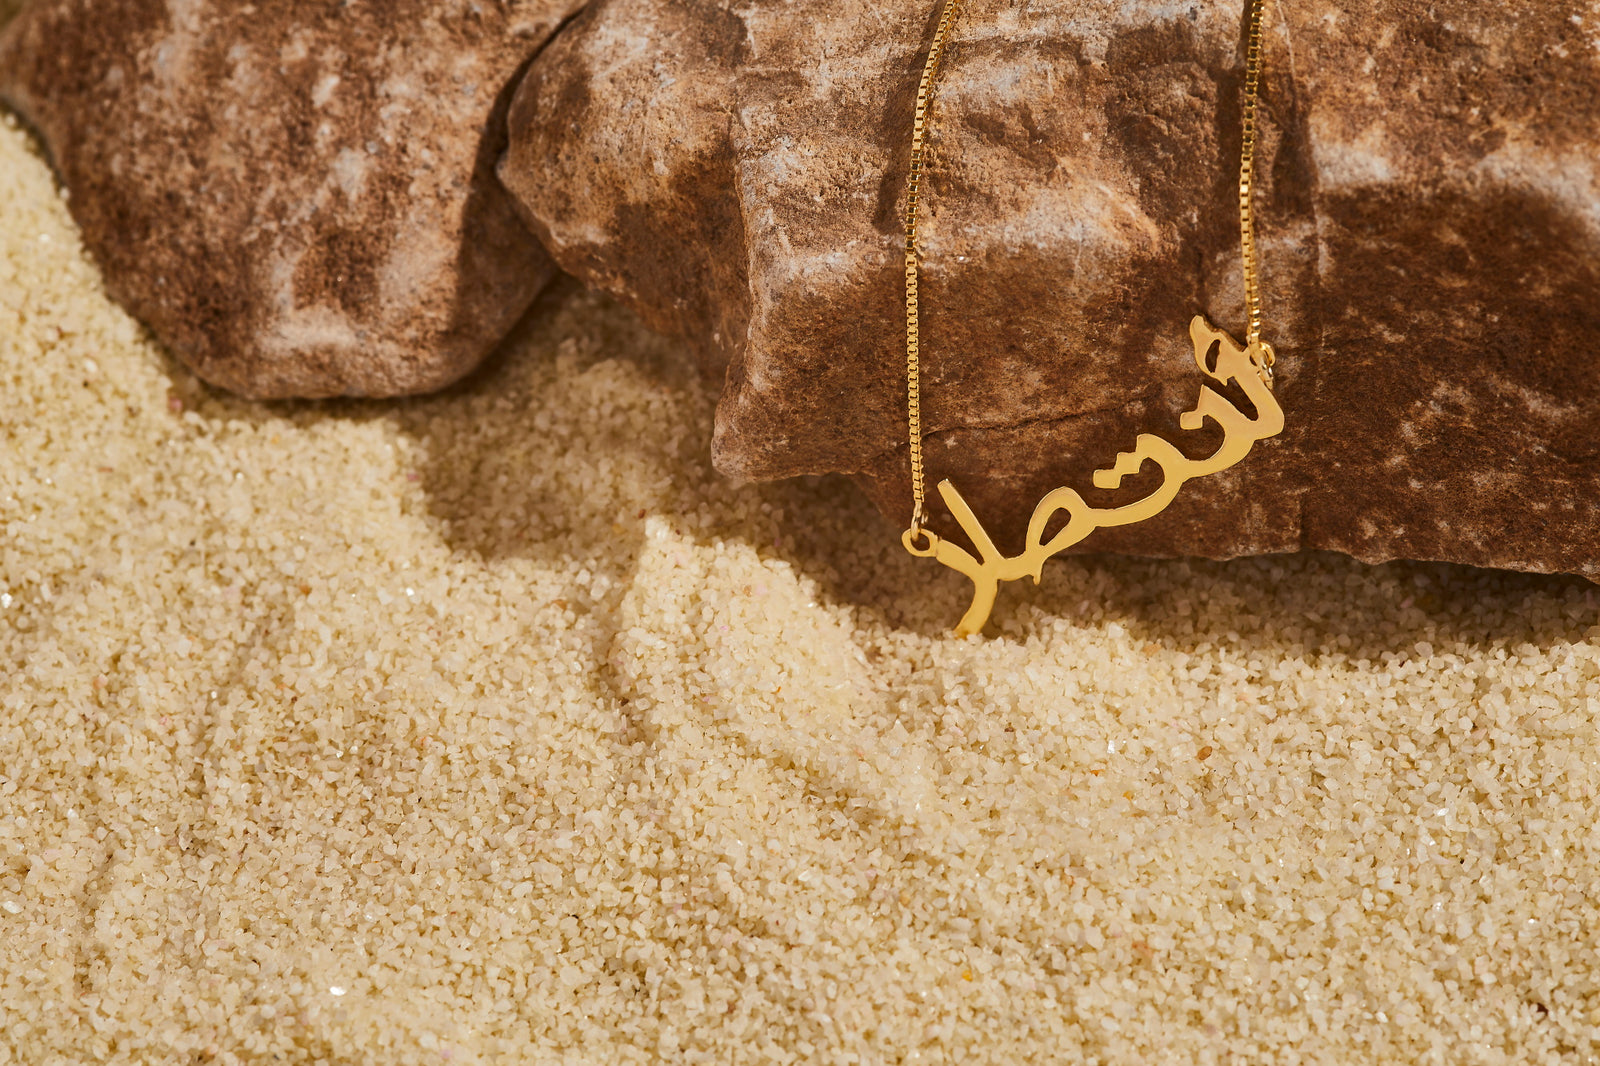 Amazon.com: Tiny Arabic Name Choker Necklace - Gold Arabic Necklace-Personalized  Choker Necklace- Choker Necklace-Bridesmaid Gift- Arabic Name Plate :  Handmade Products